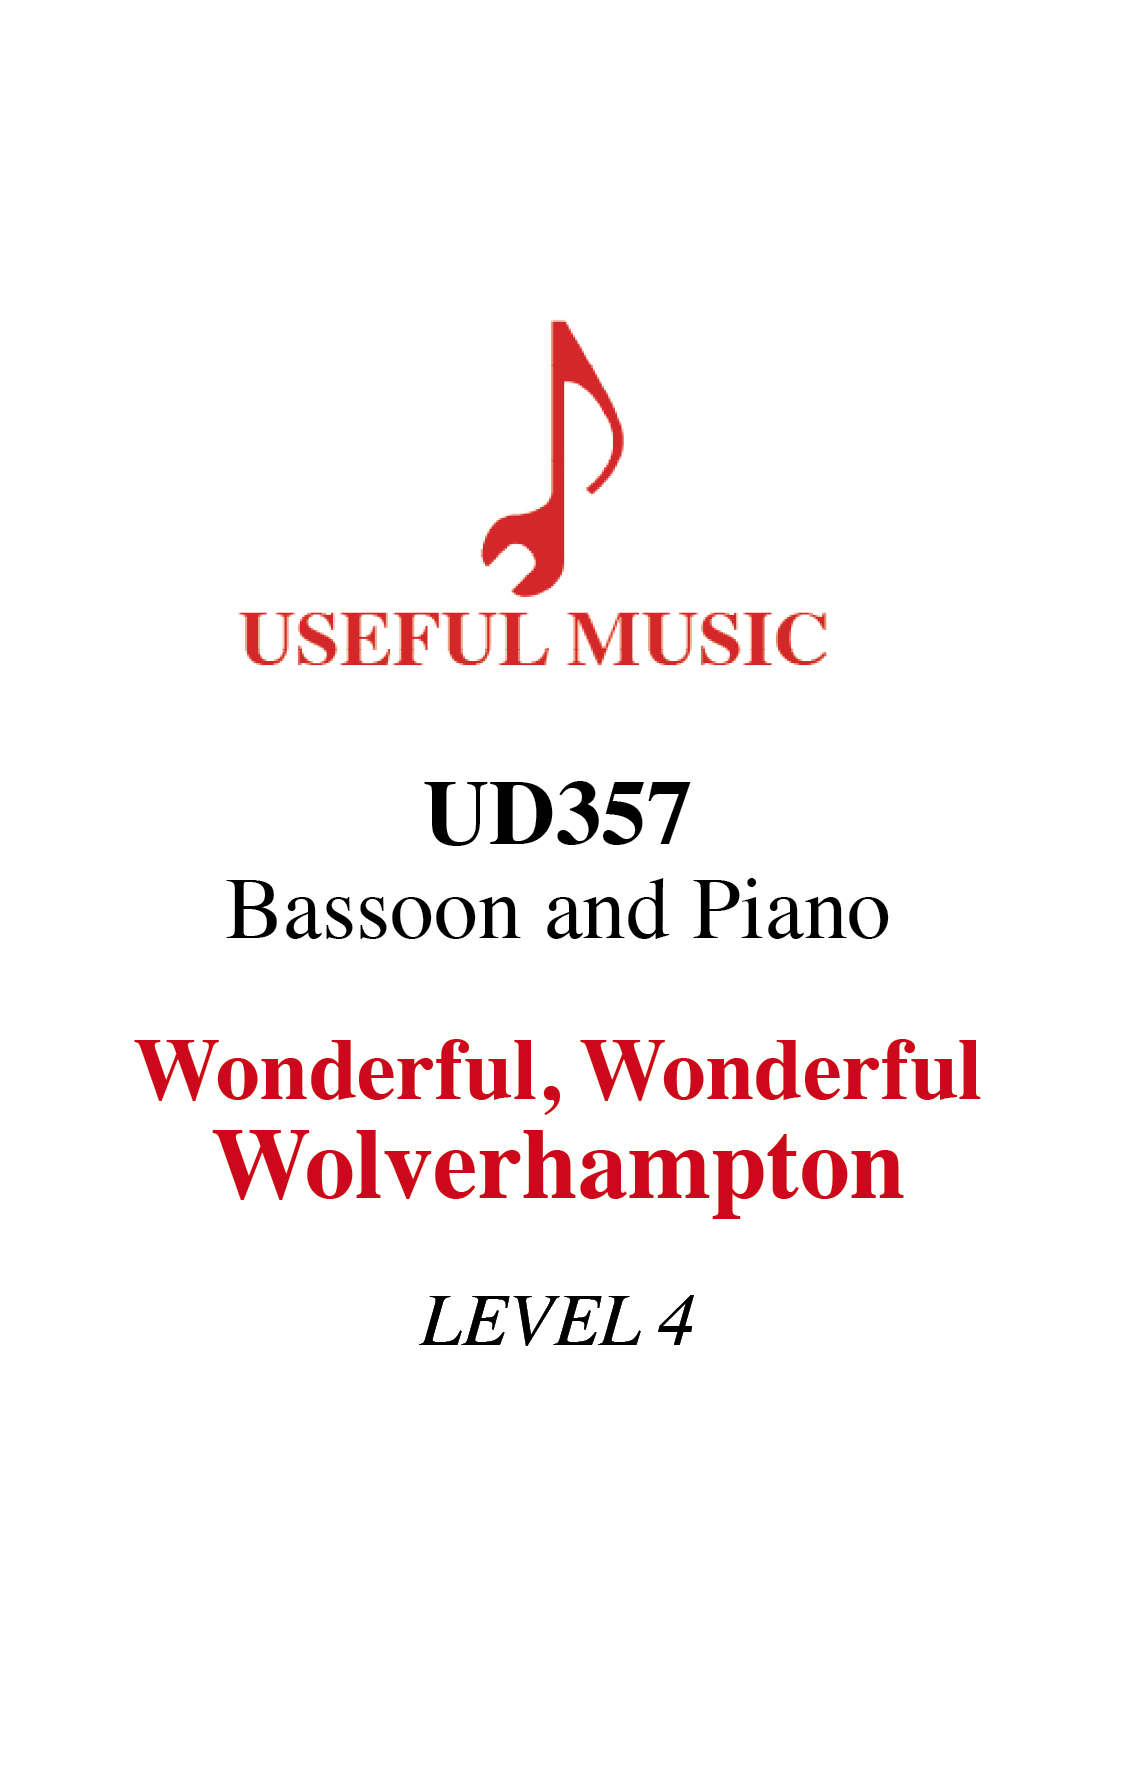 WONDERFUL, WONDERFUL WOLVERHAMPTON- bassoon with piano accompaniment